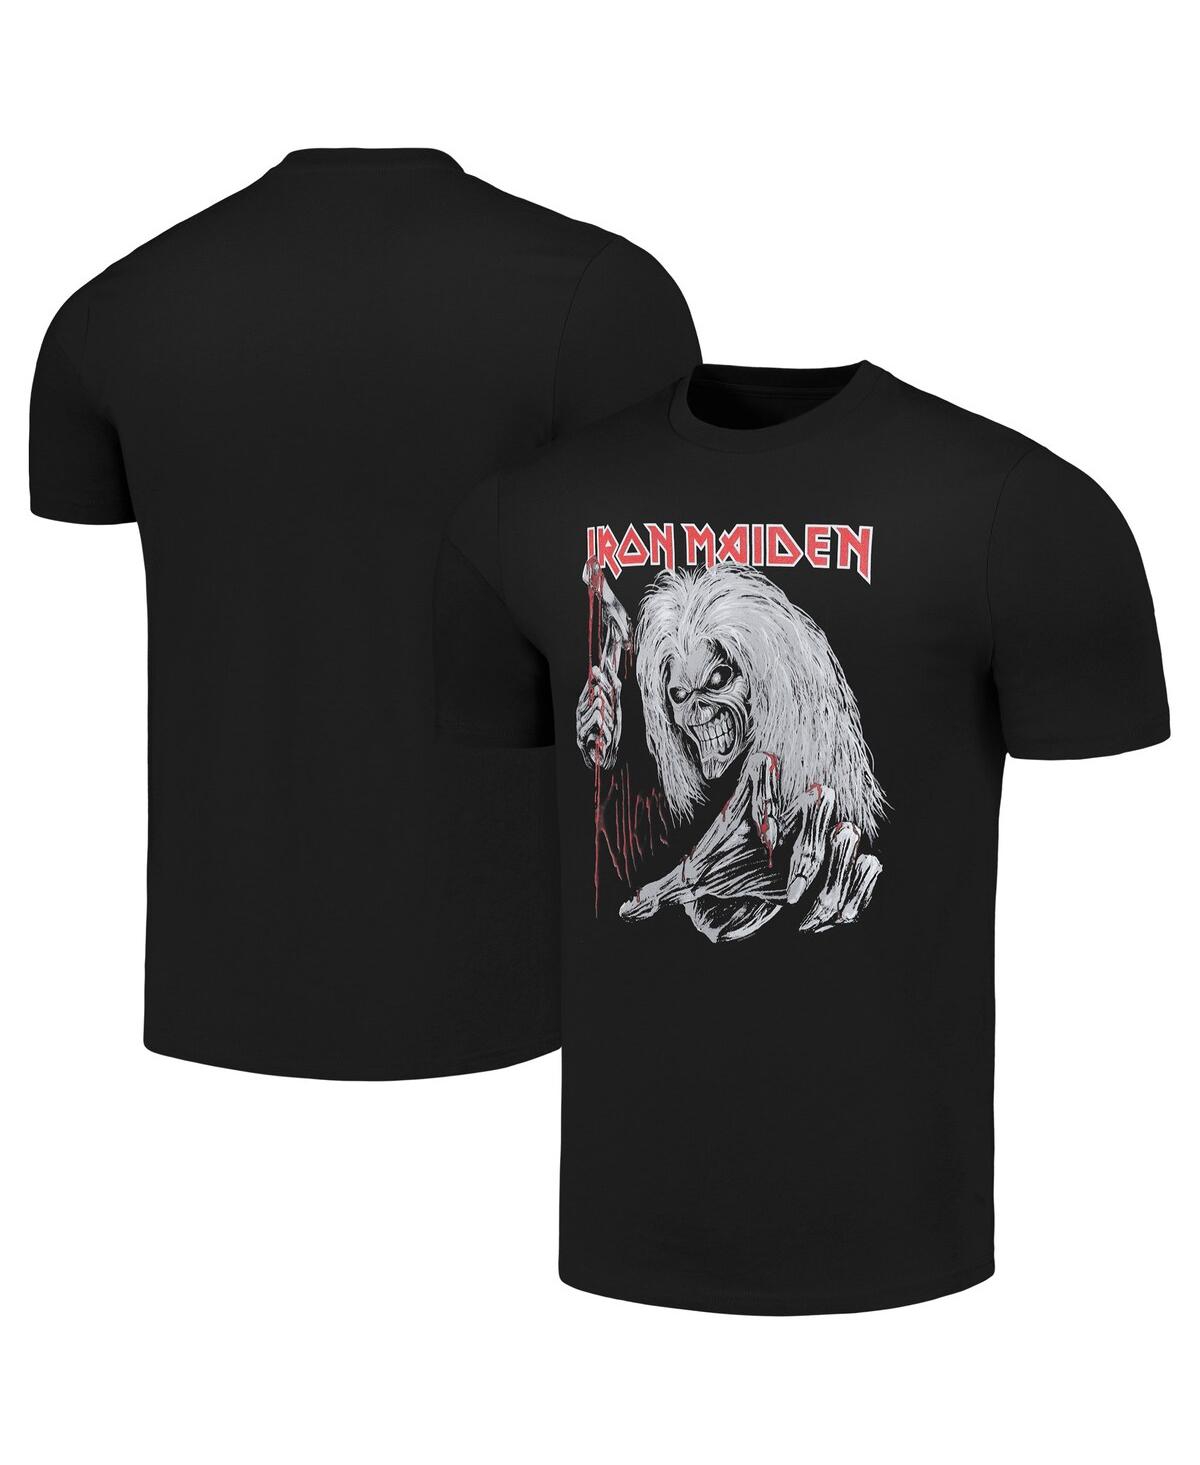 Men's Black Iron Maiden Killers T-shirt - Black